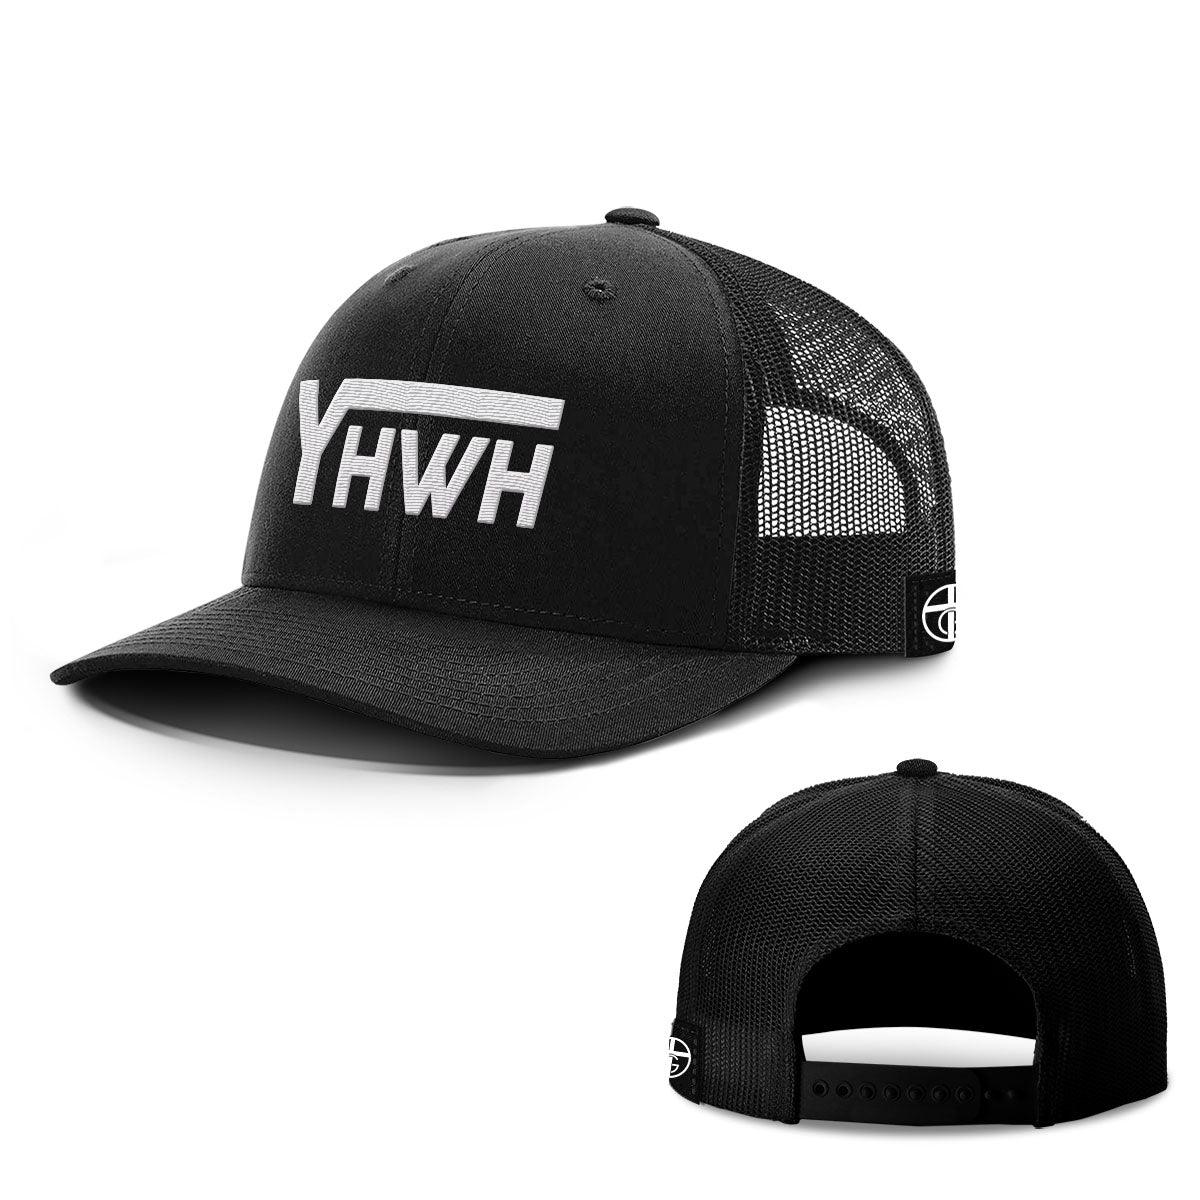 YHWH Hats